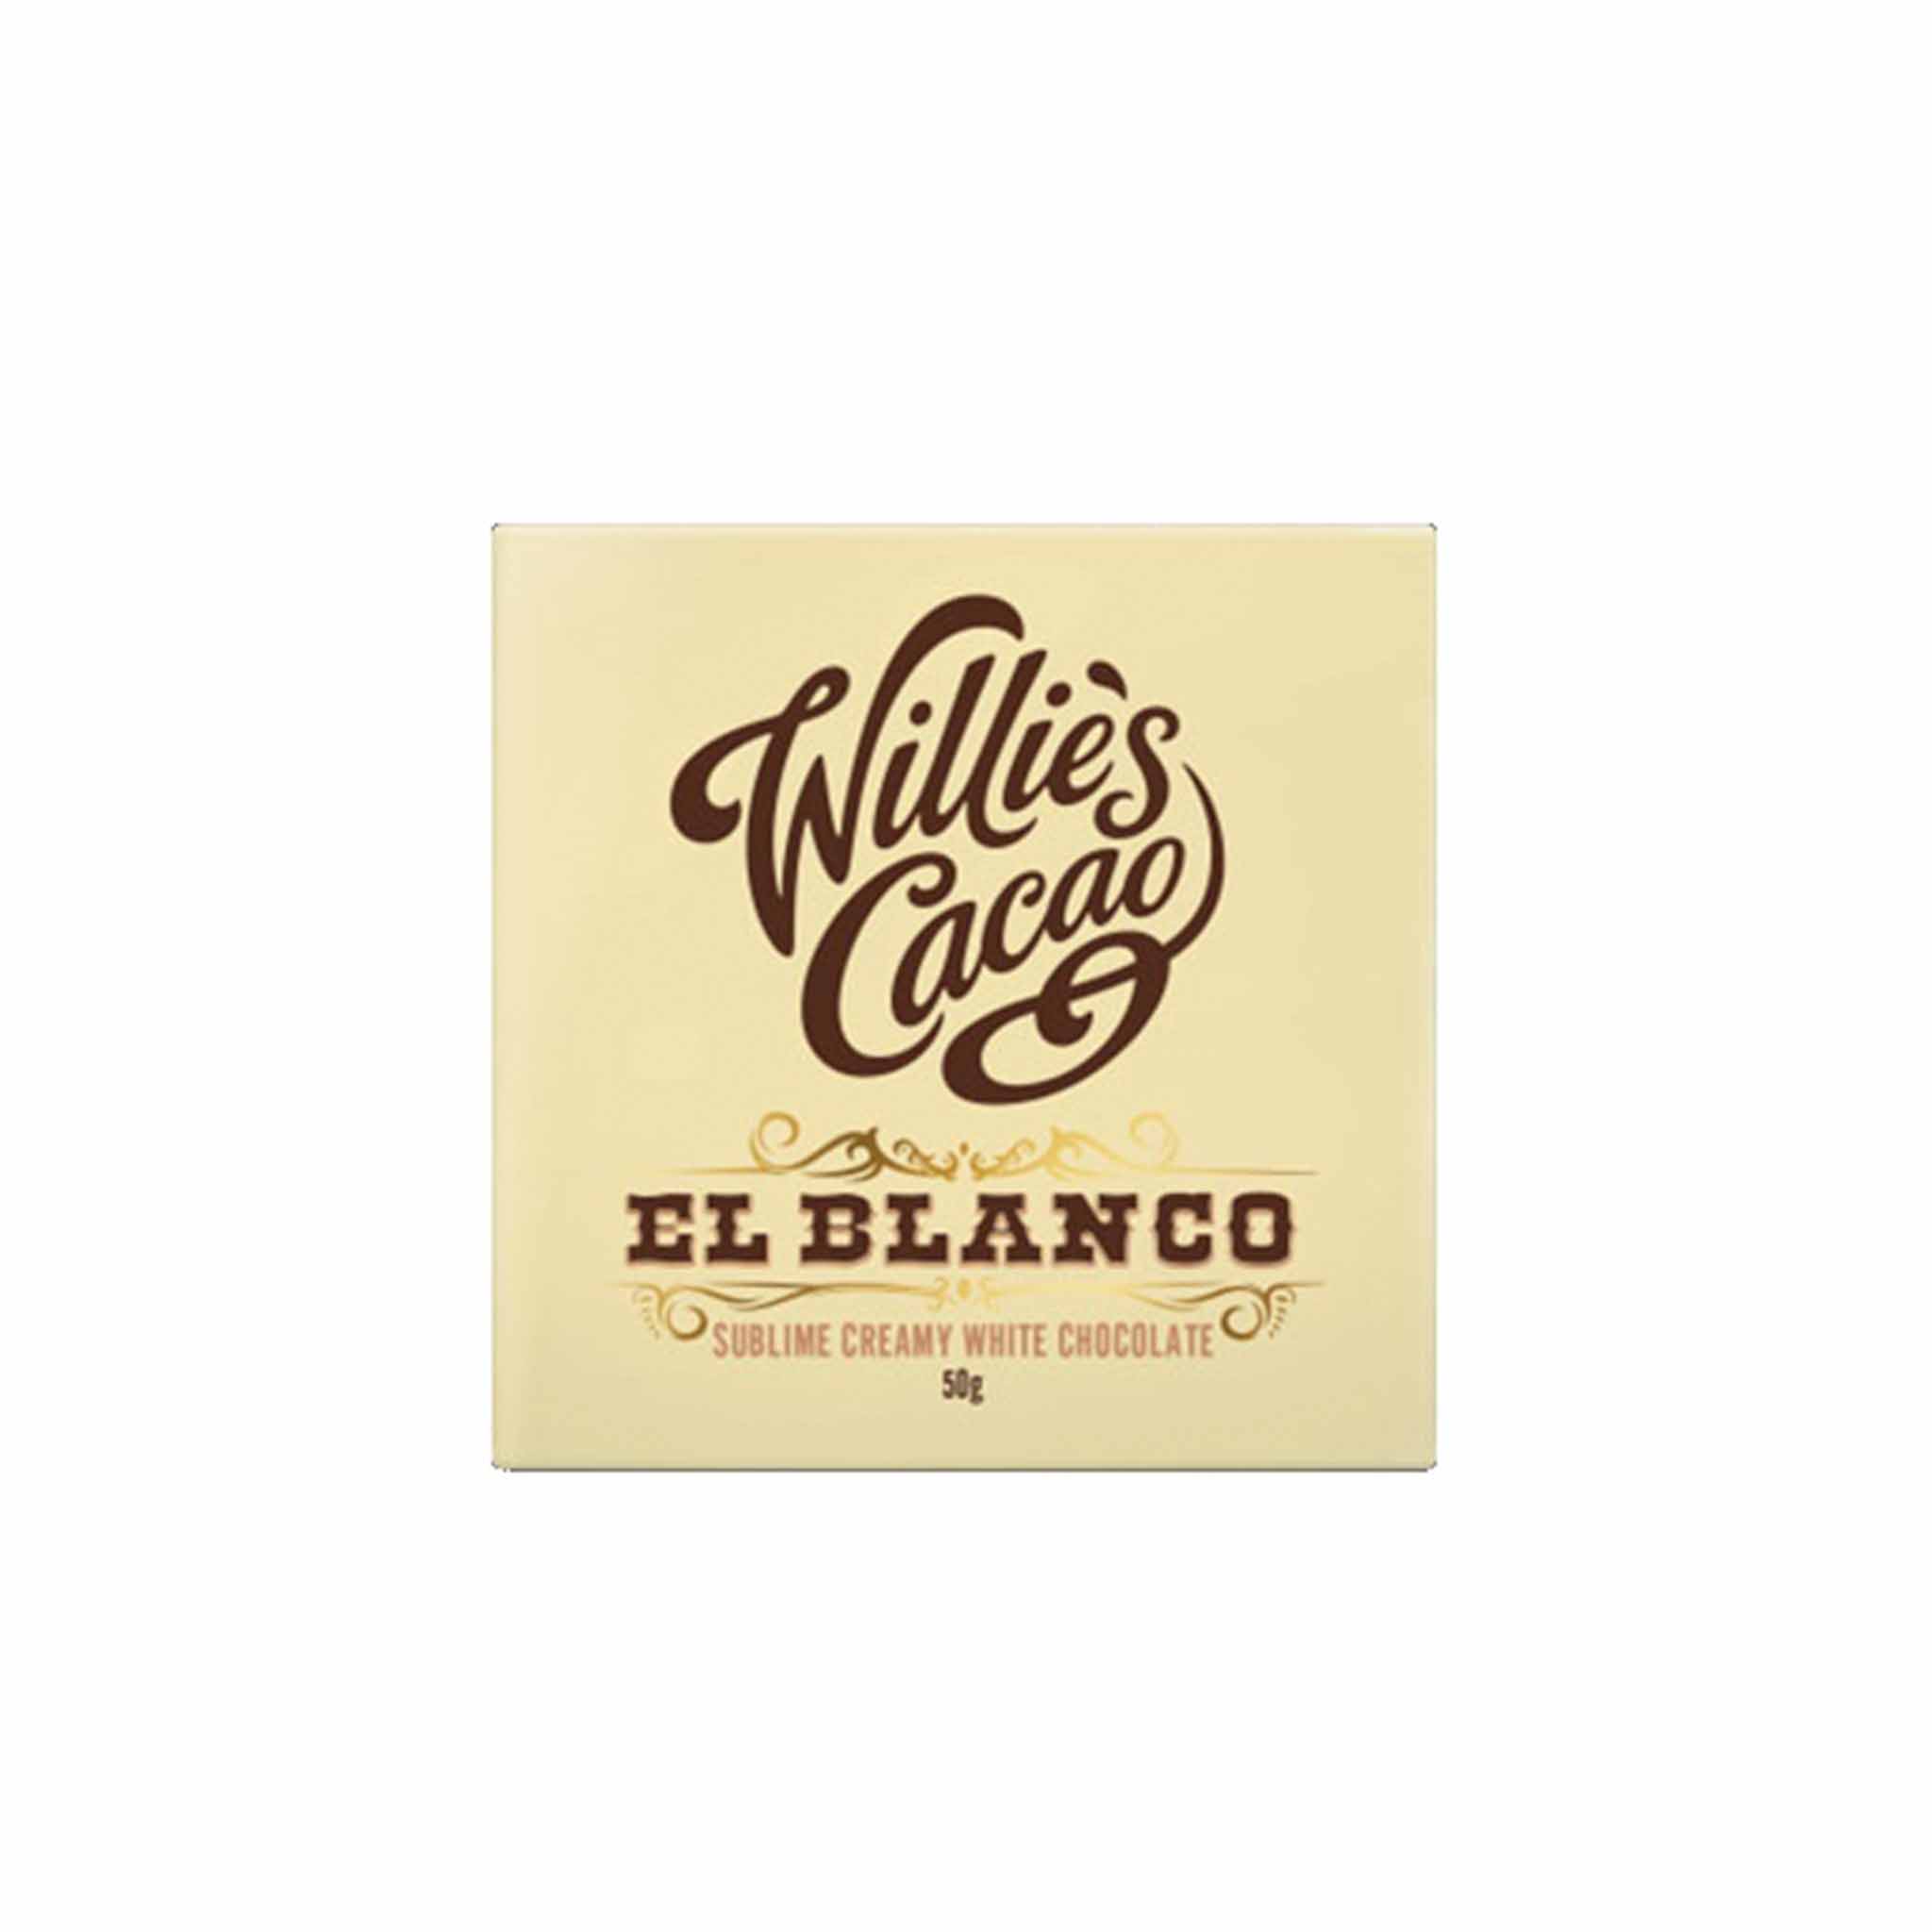 WILLIE'S CACAO EL BLANCO WHITE CHOCOLATE 50g